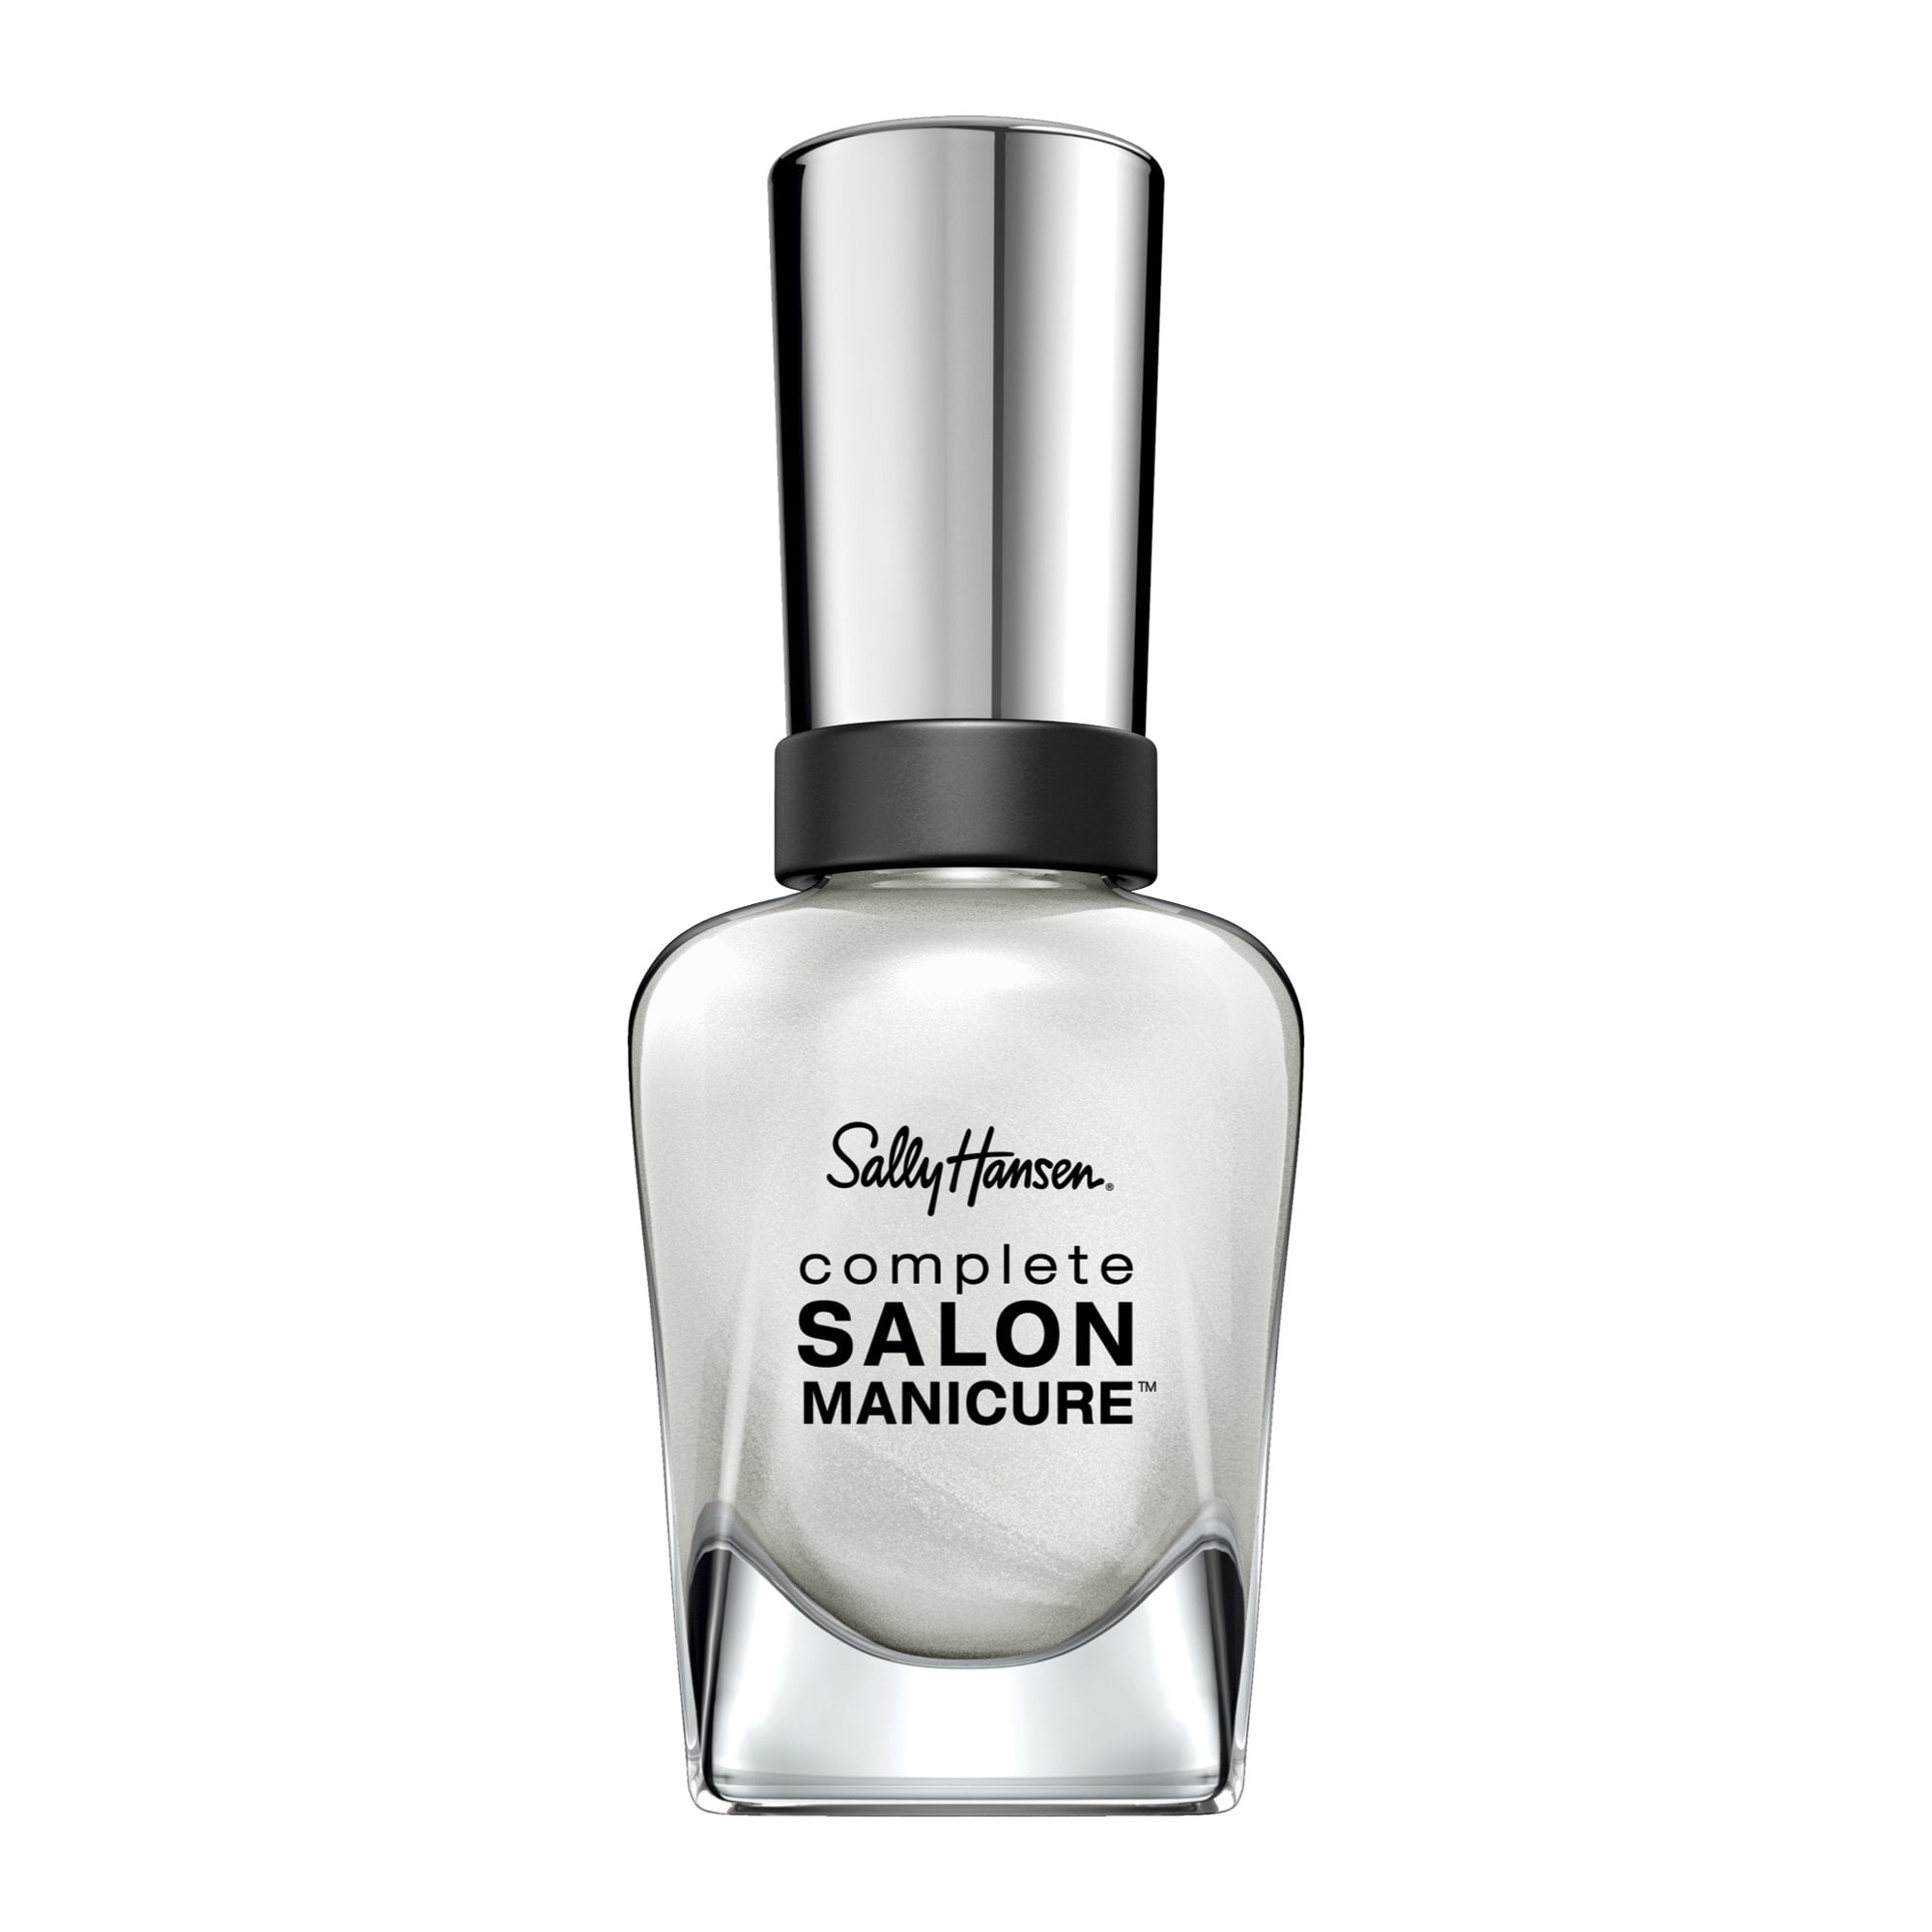 Sally Hansen Complete Salon Manicure Nail Polish, Sheer Ecstasy -  